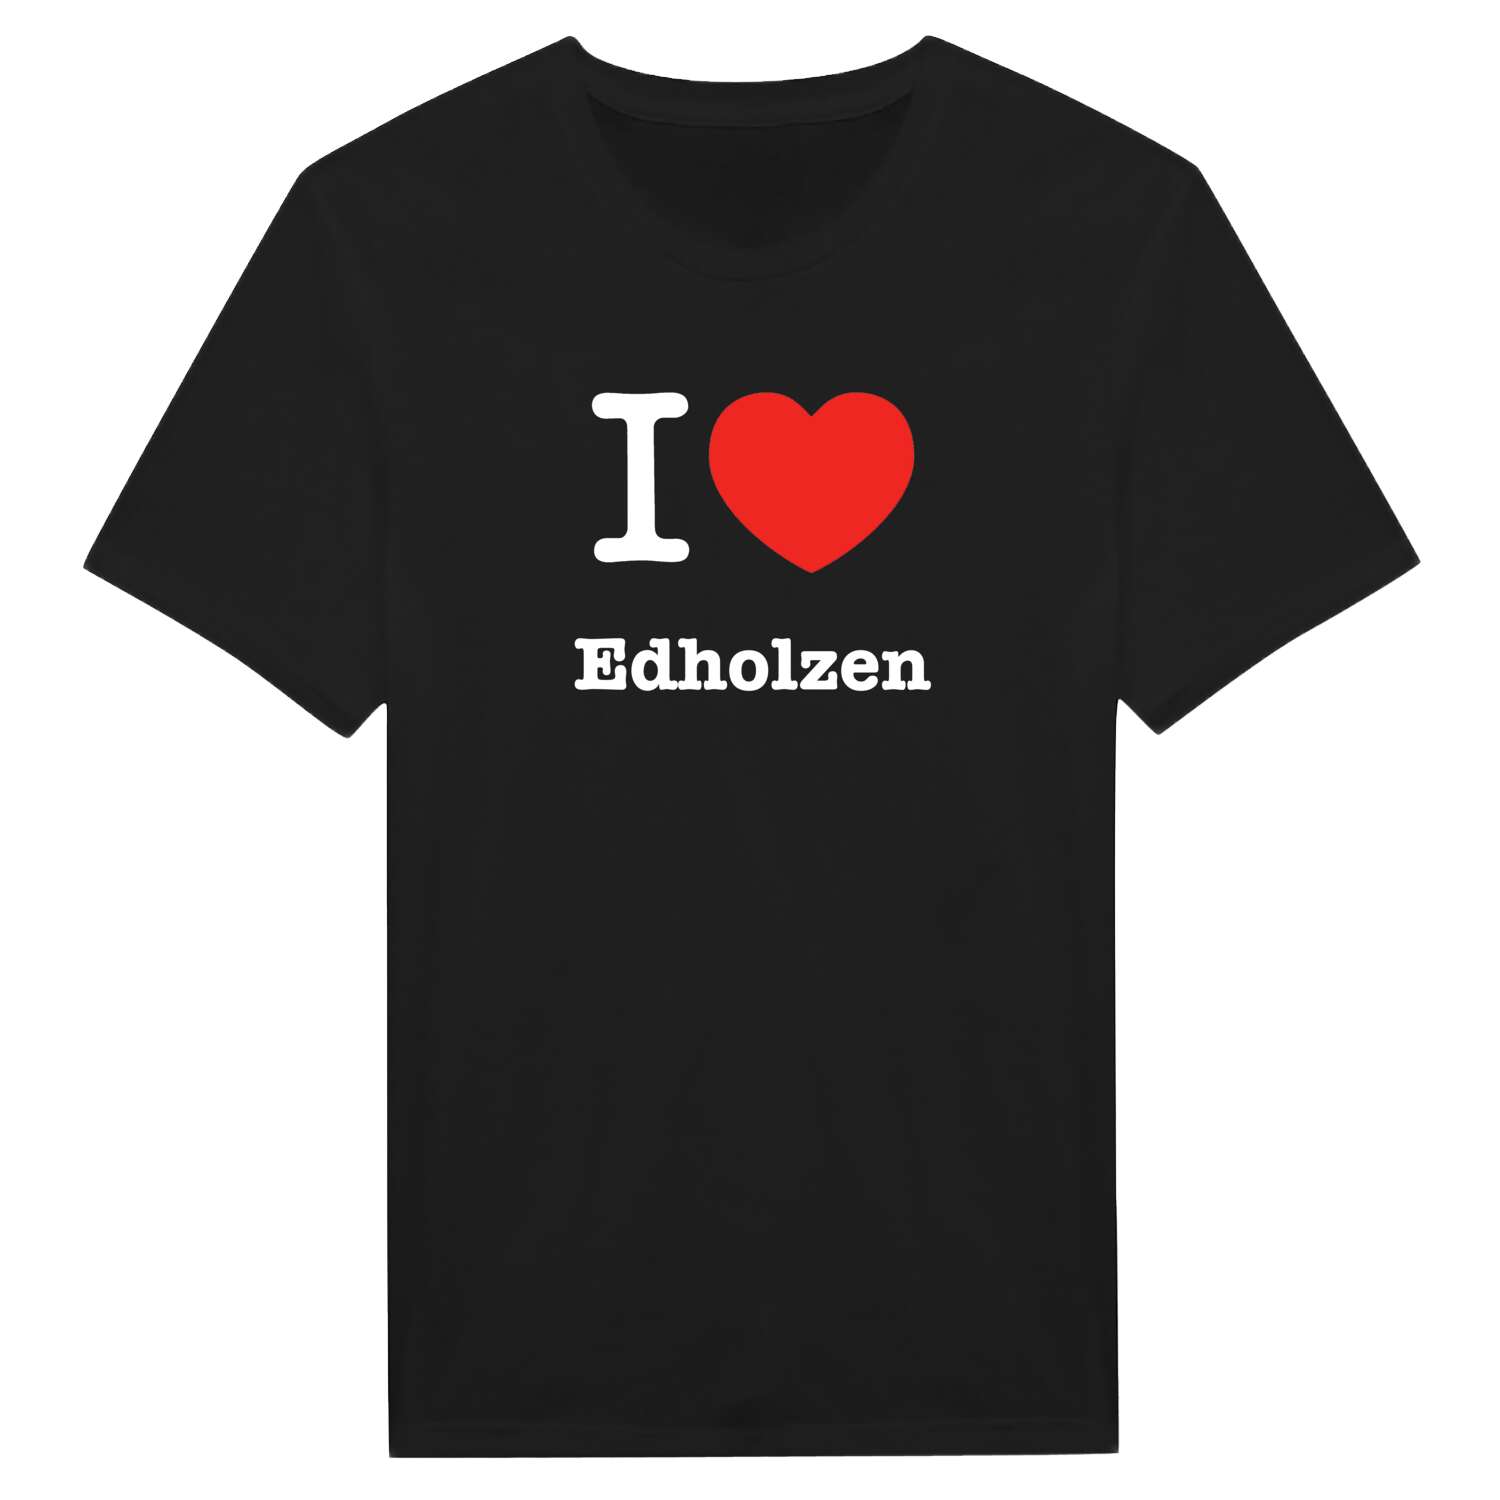 Edholzen T-Shirt »I love«